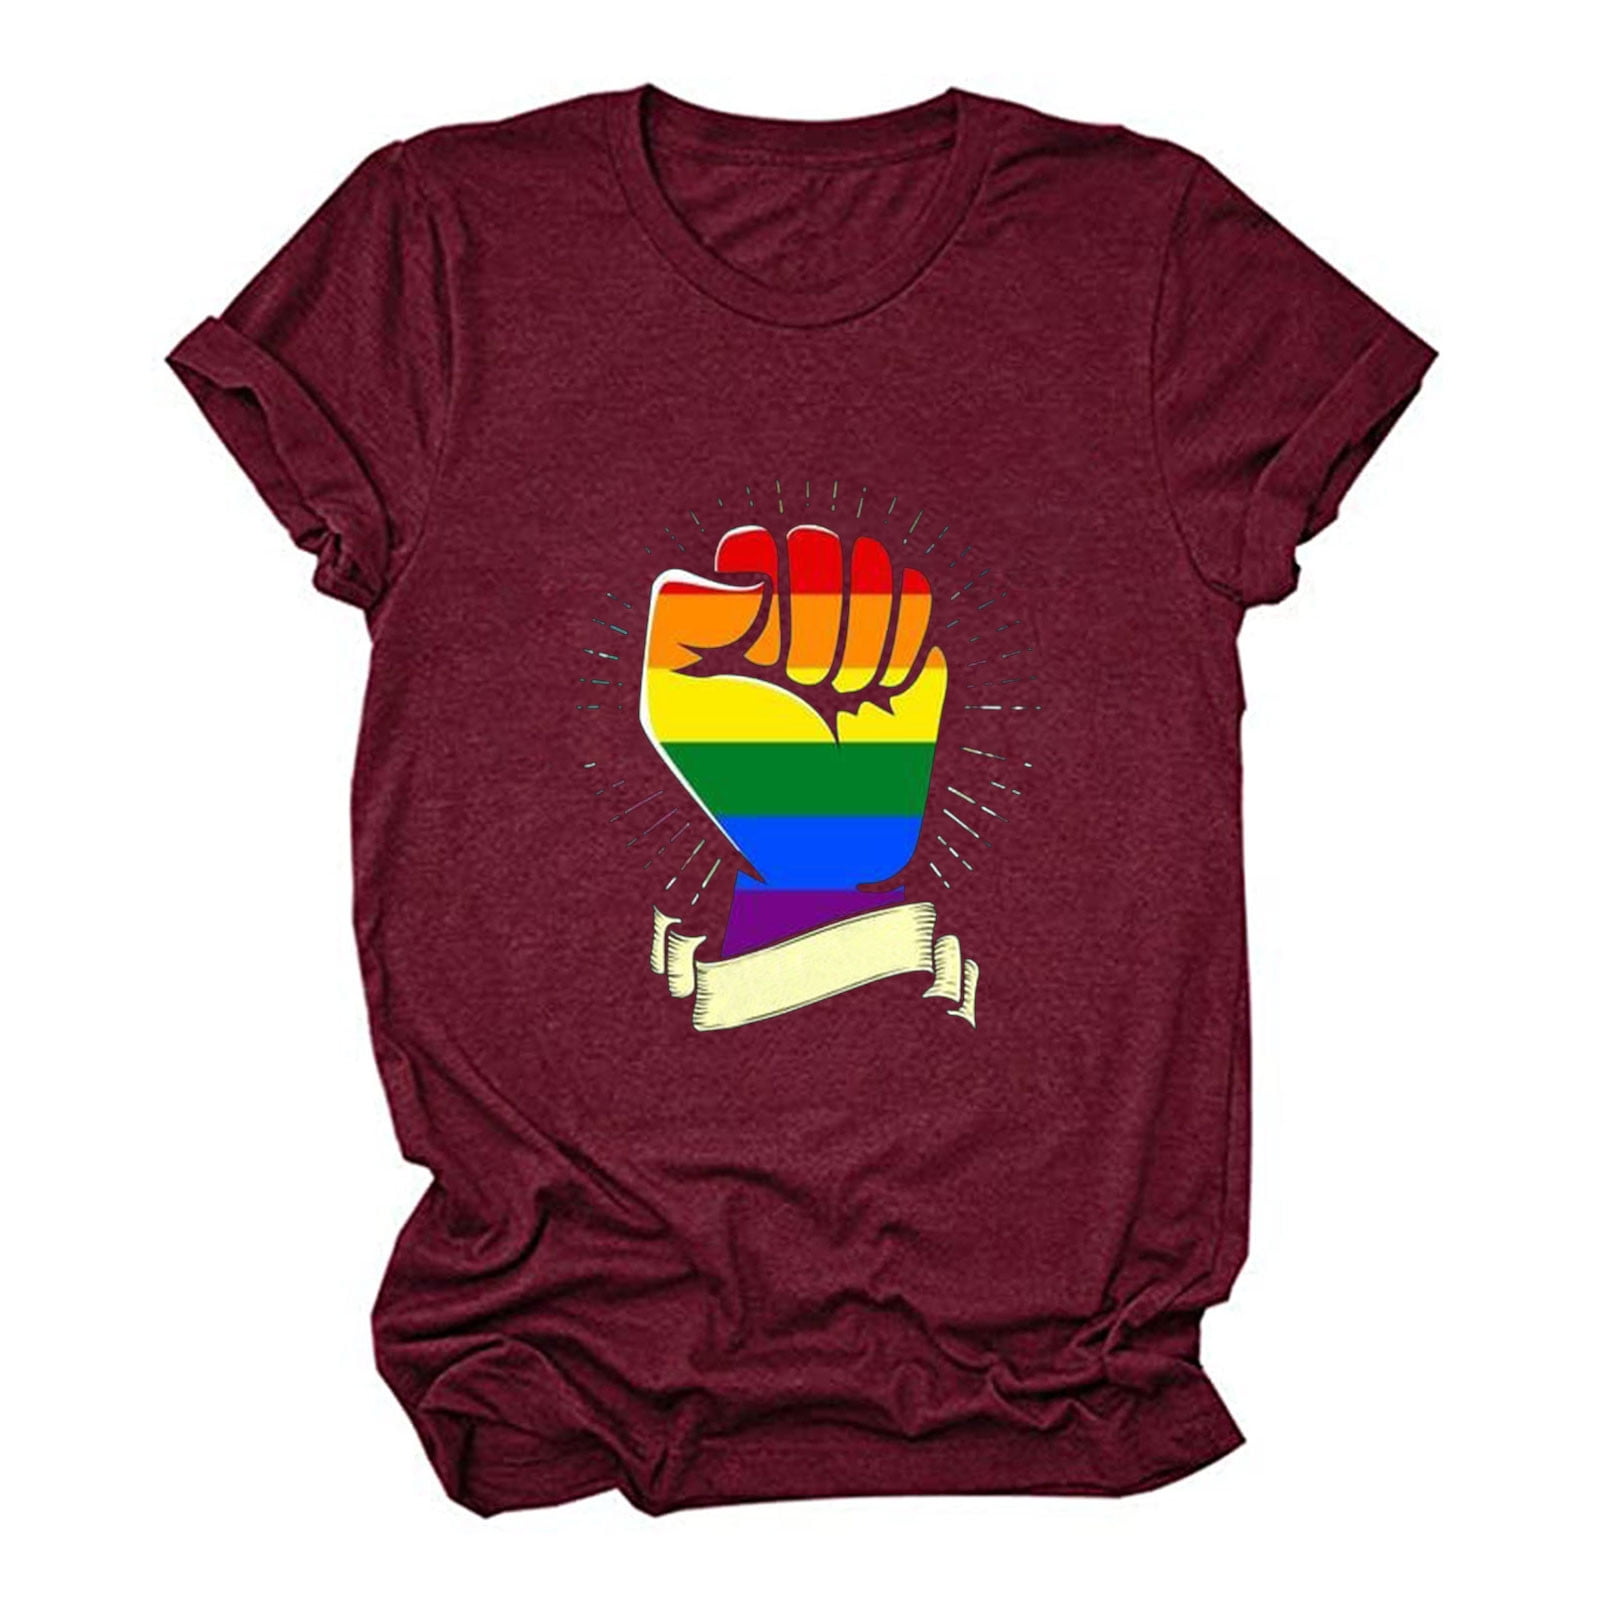 Rainbow Running Shirt "equality" Women Size S 